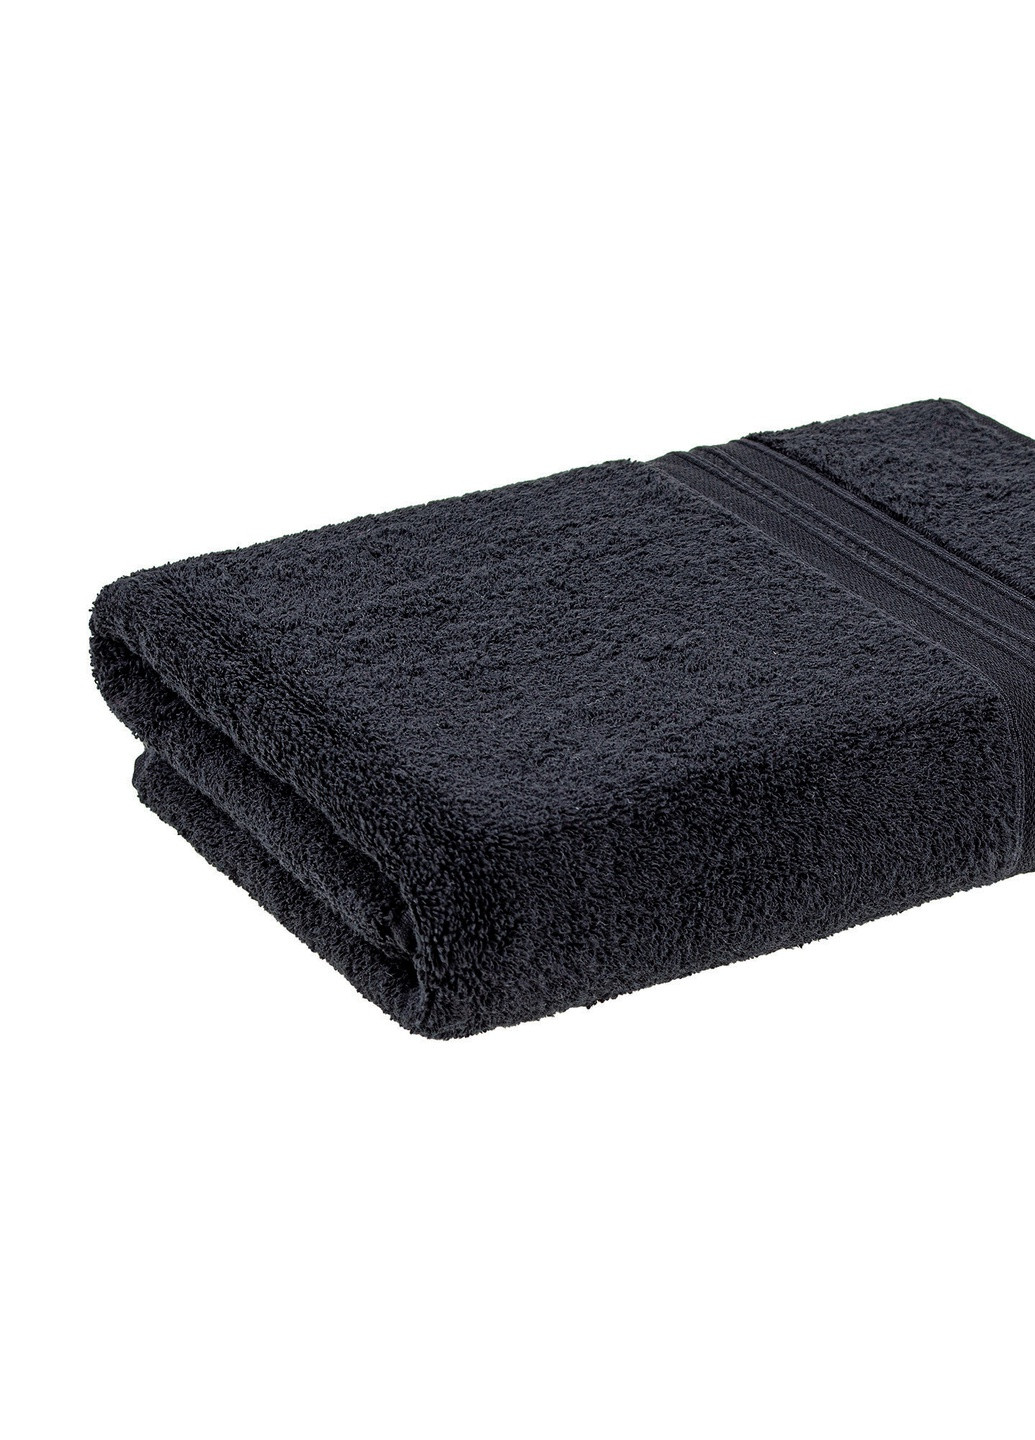 Home Line полотенце махровое 70х140 черный производство - Турция